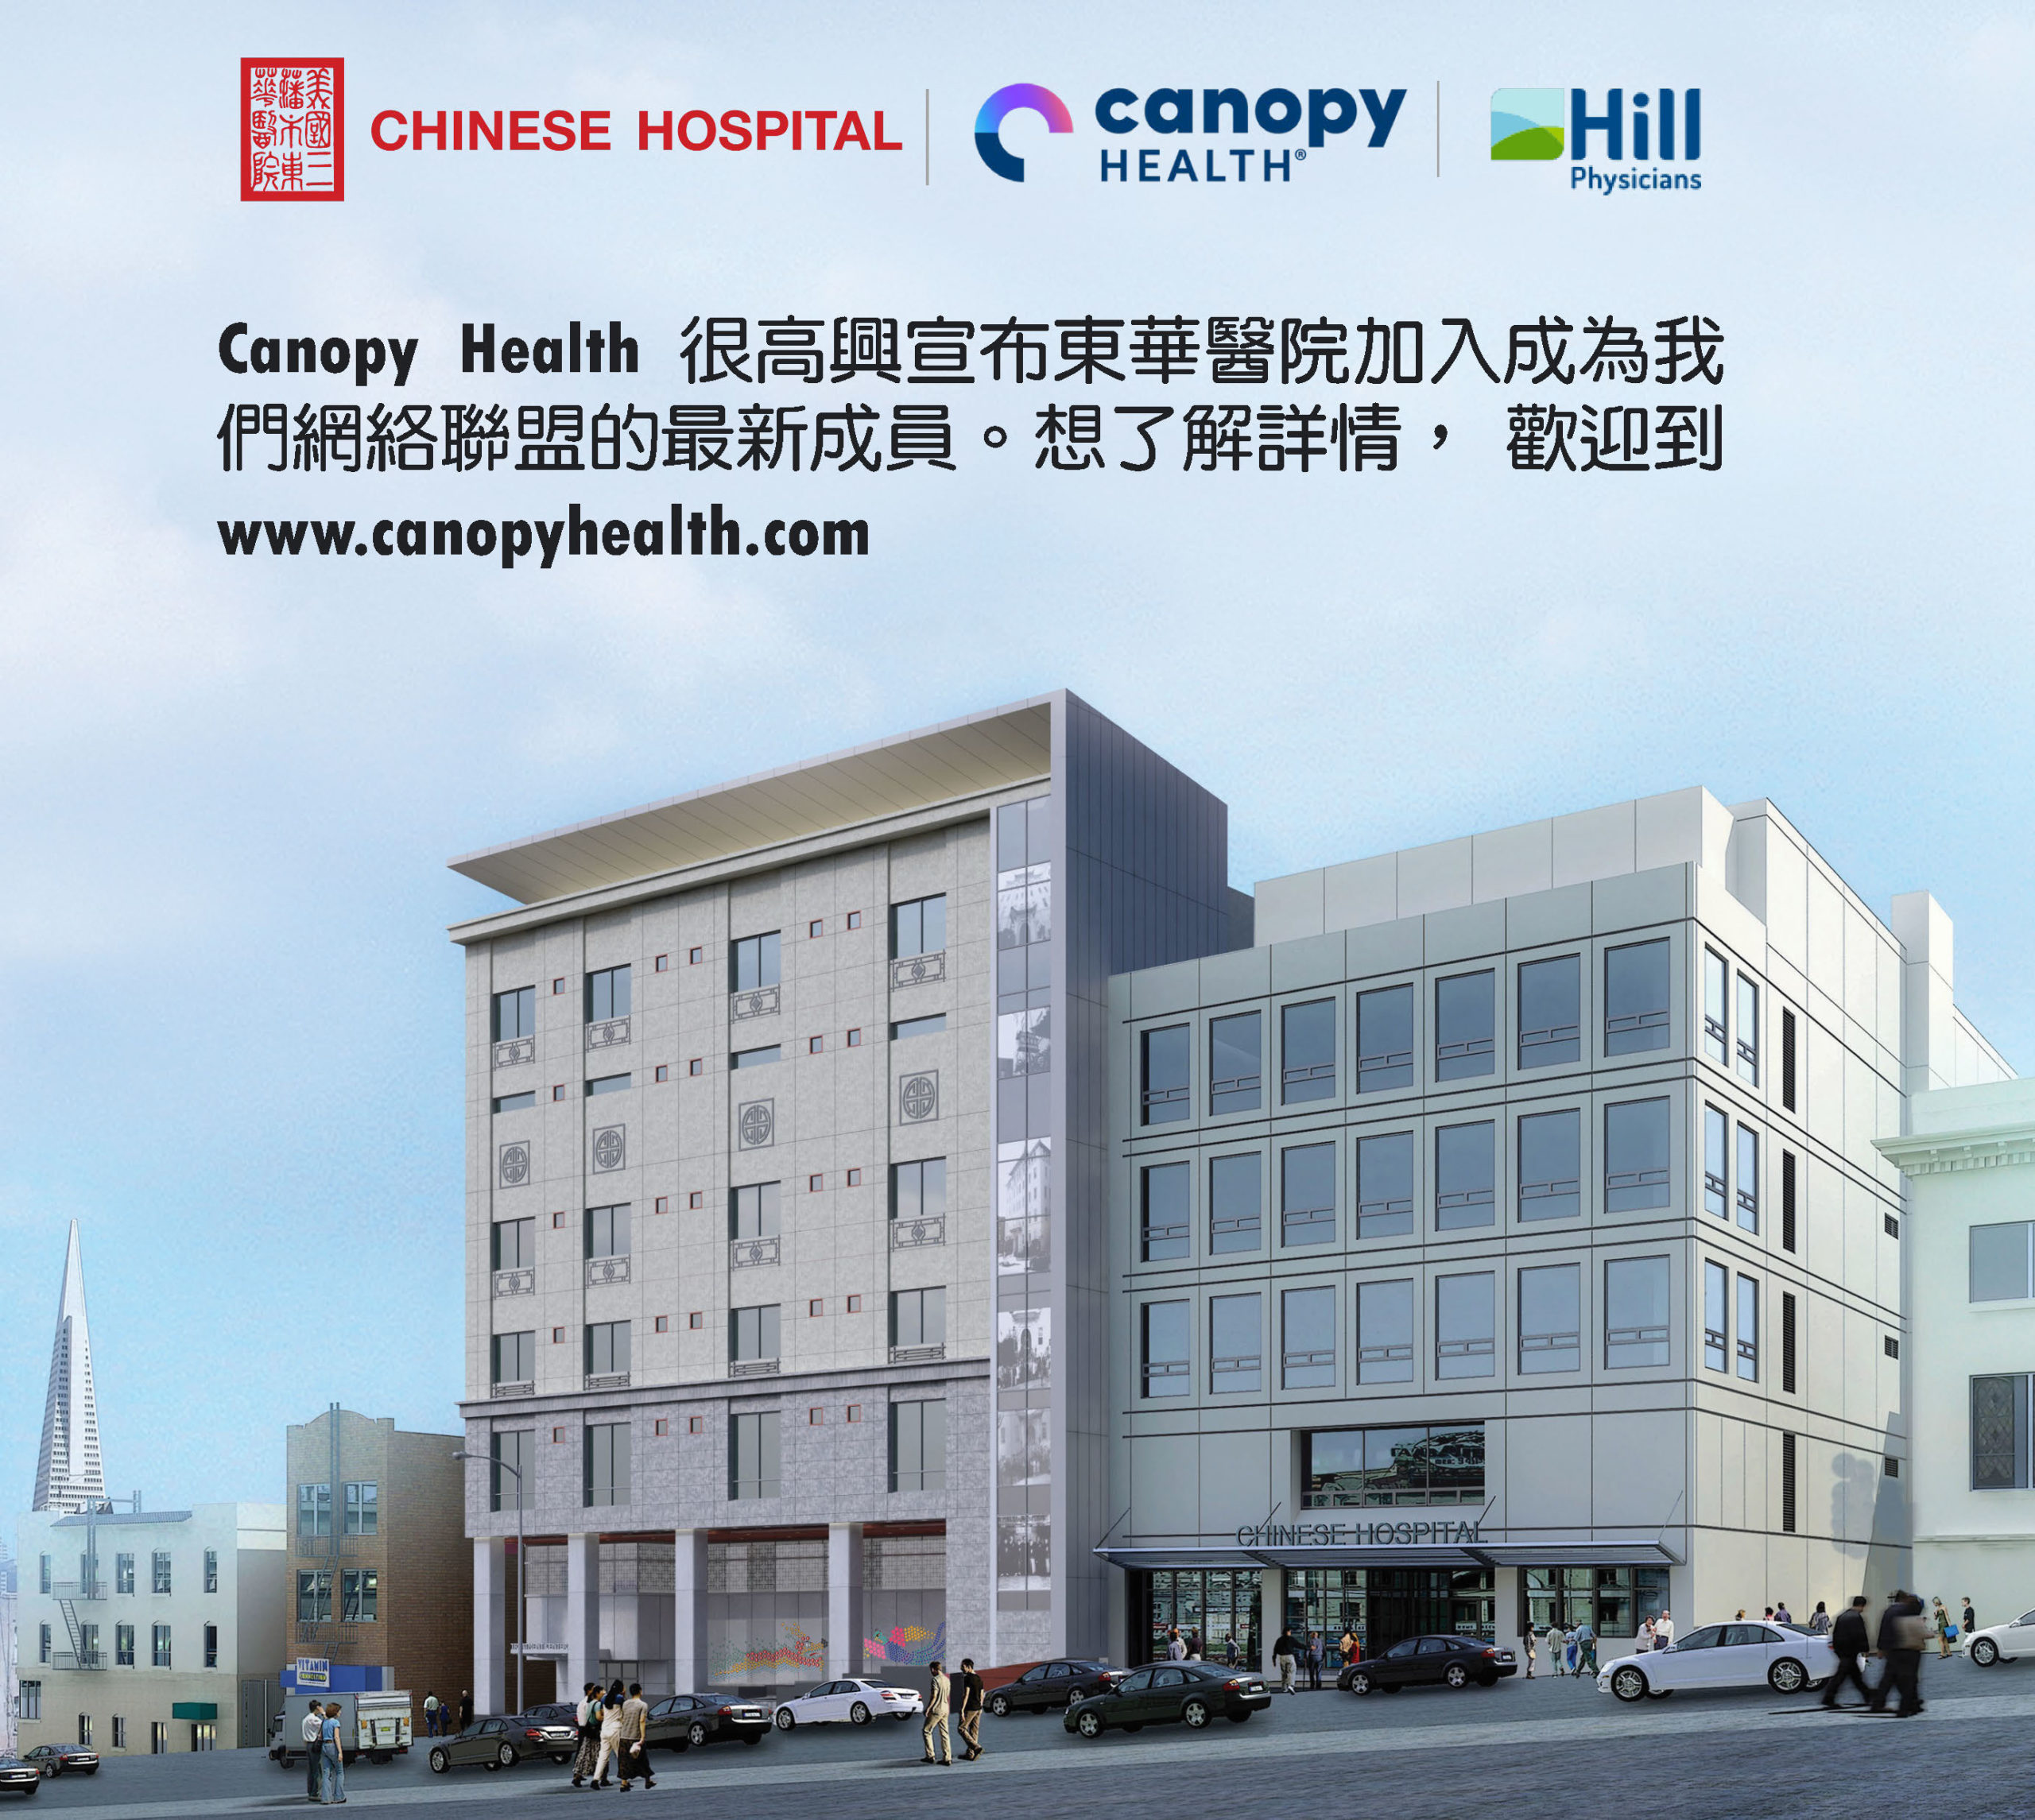 Canopy Health 宣布東華醫院將加入其網絡聯盟